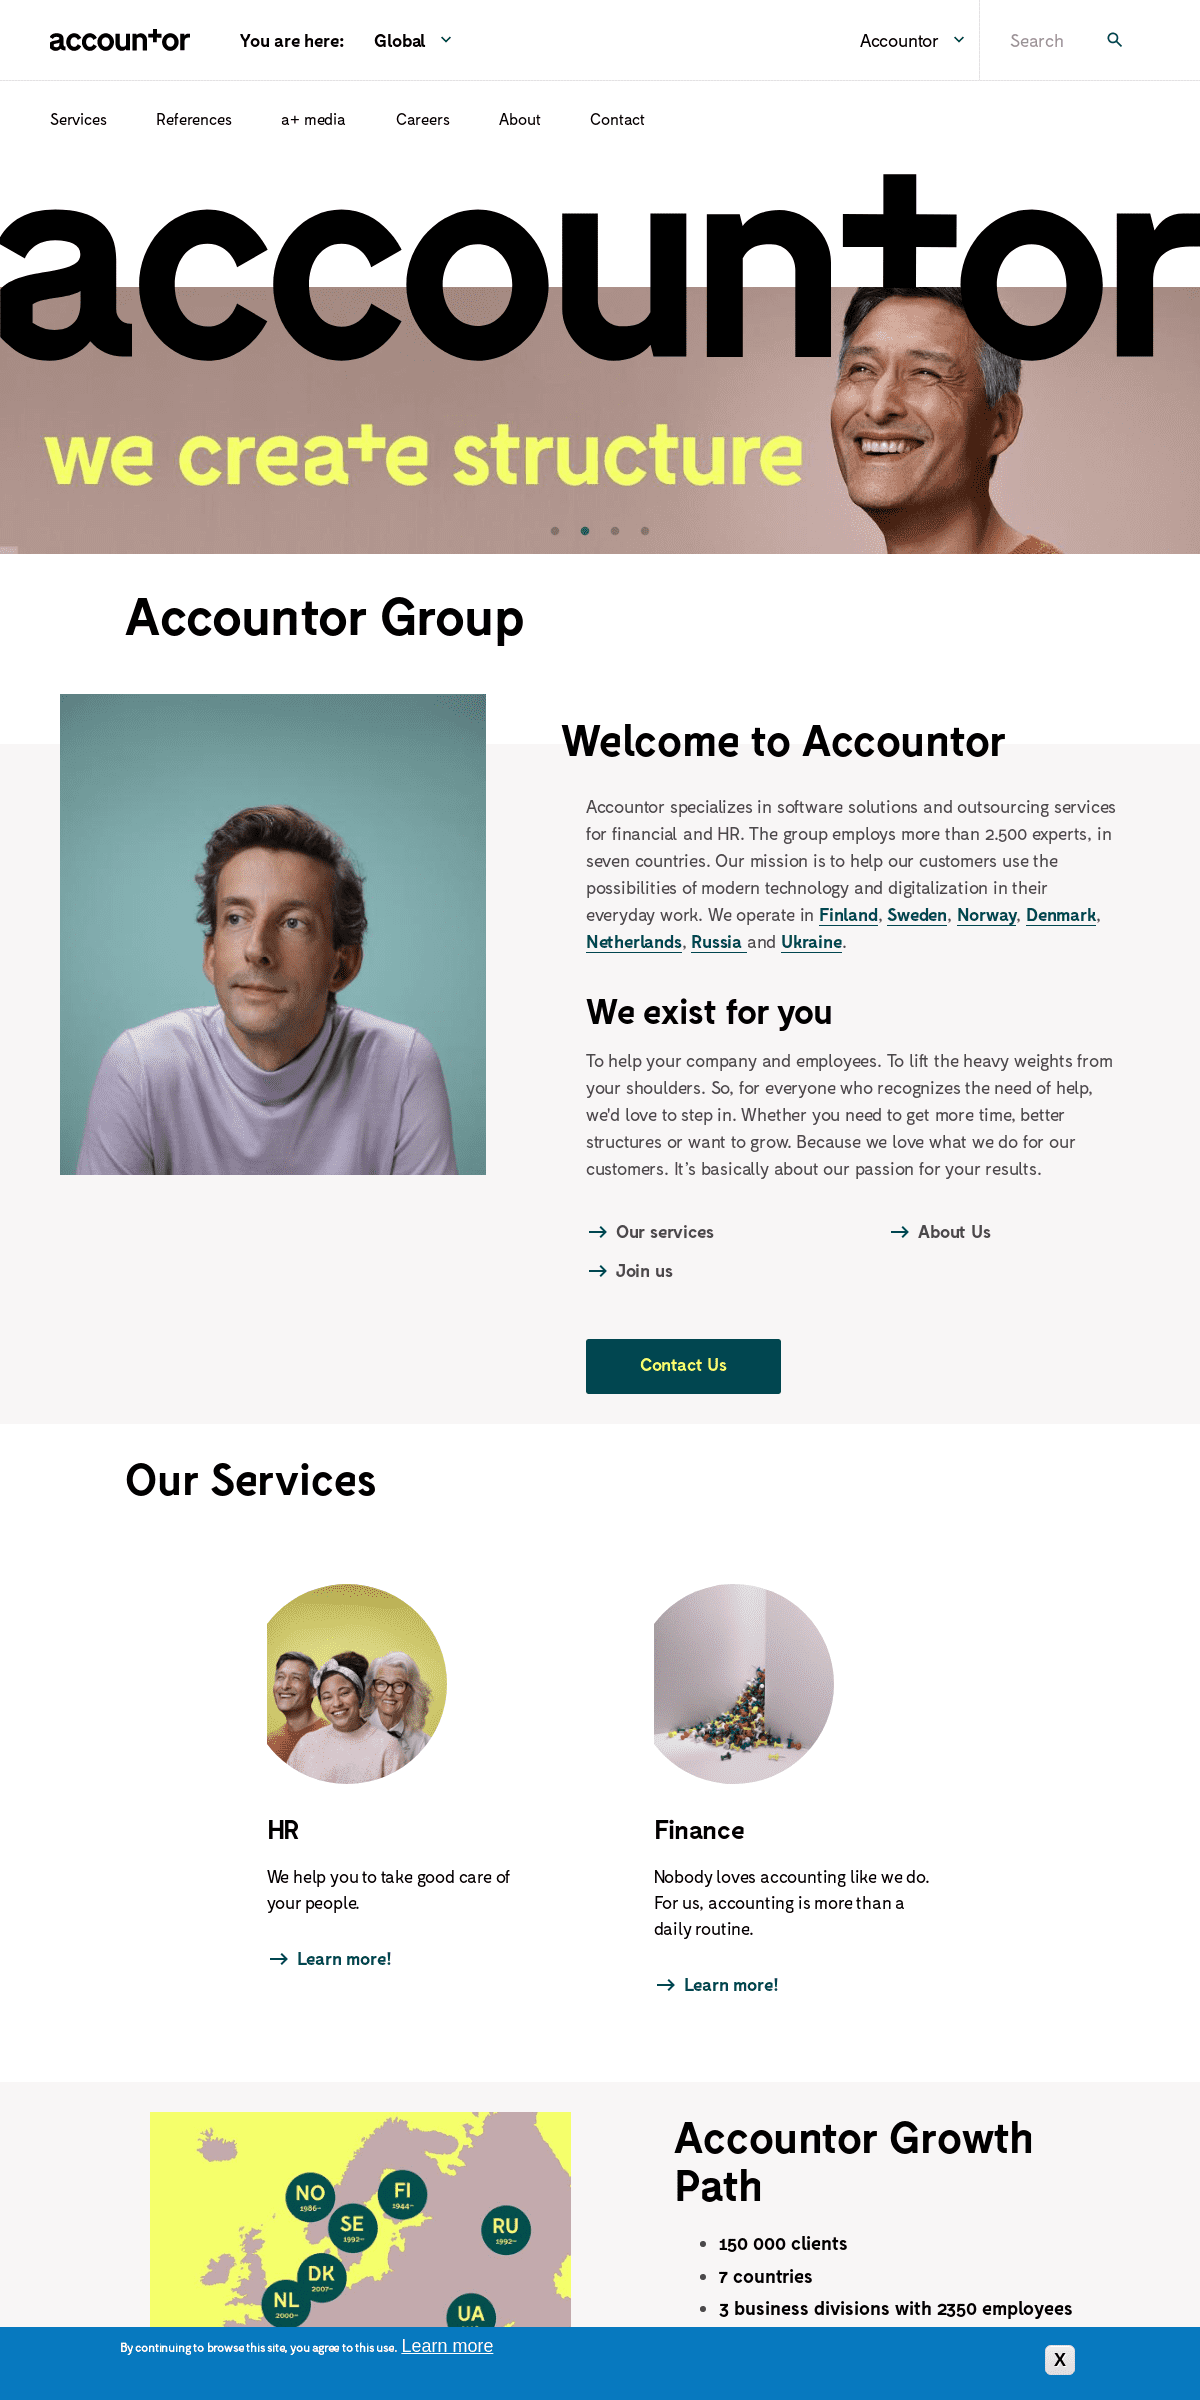 A complete backup of accountor.com